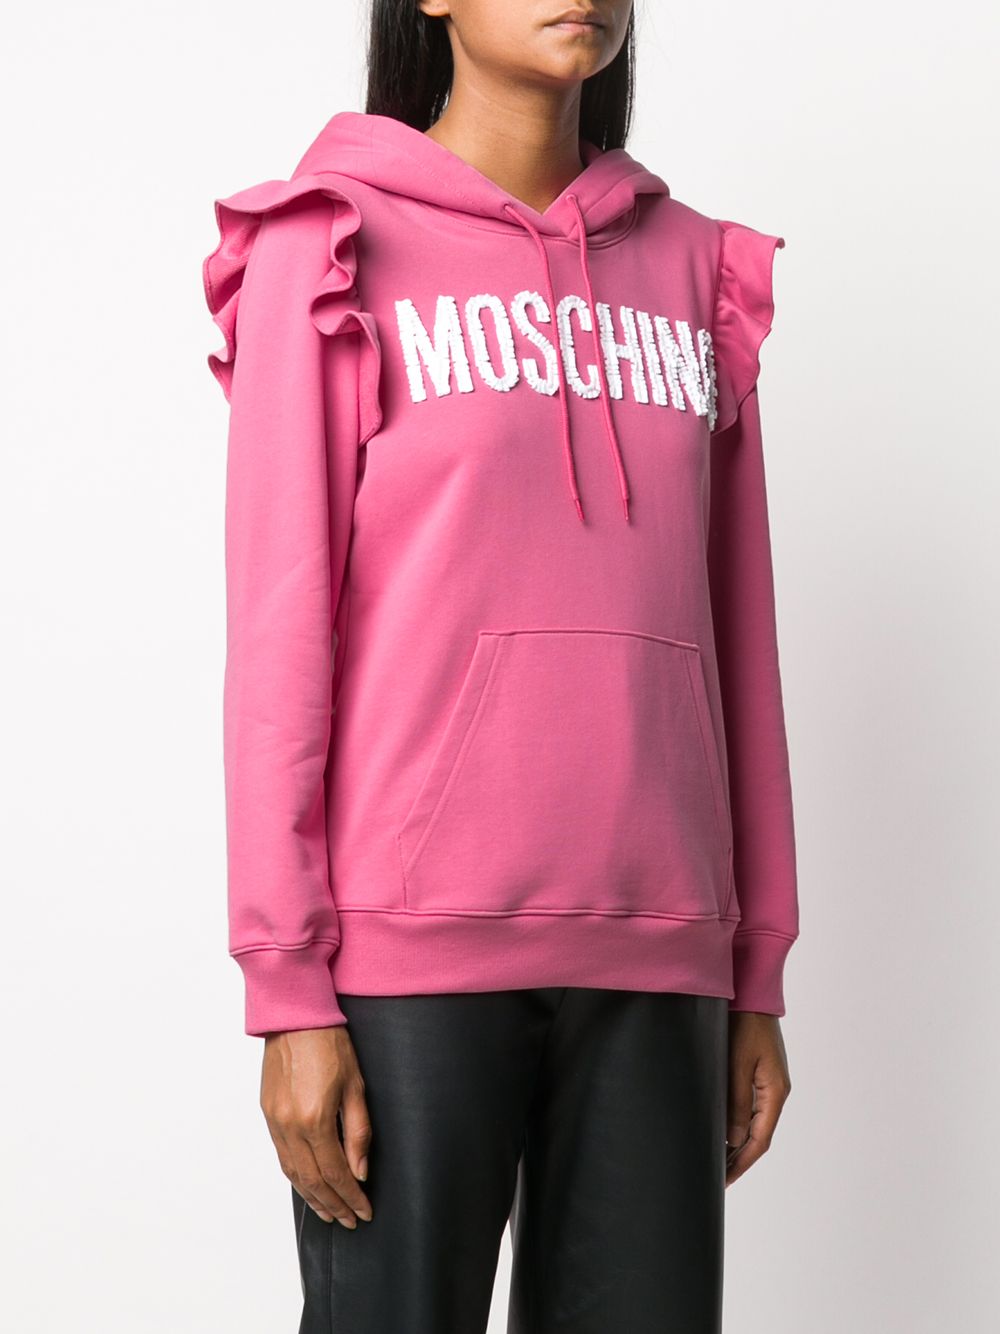 фото Moschino худи с оборками и декорированным логотипом